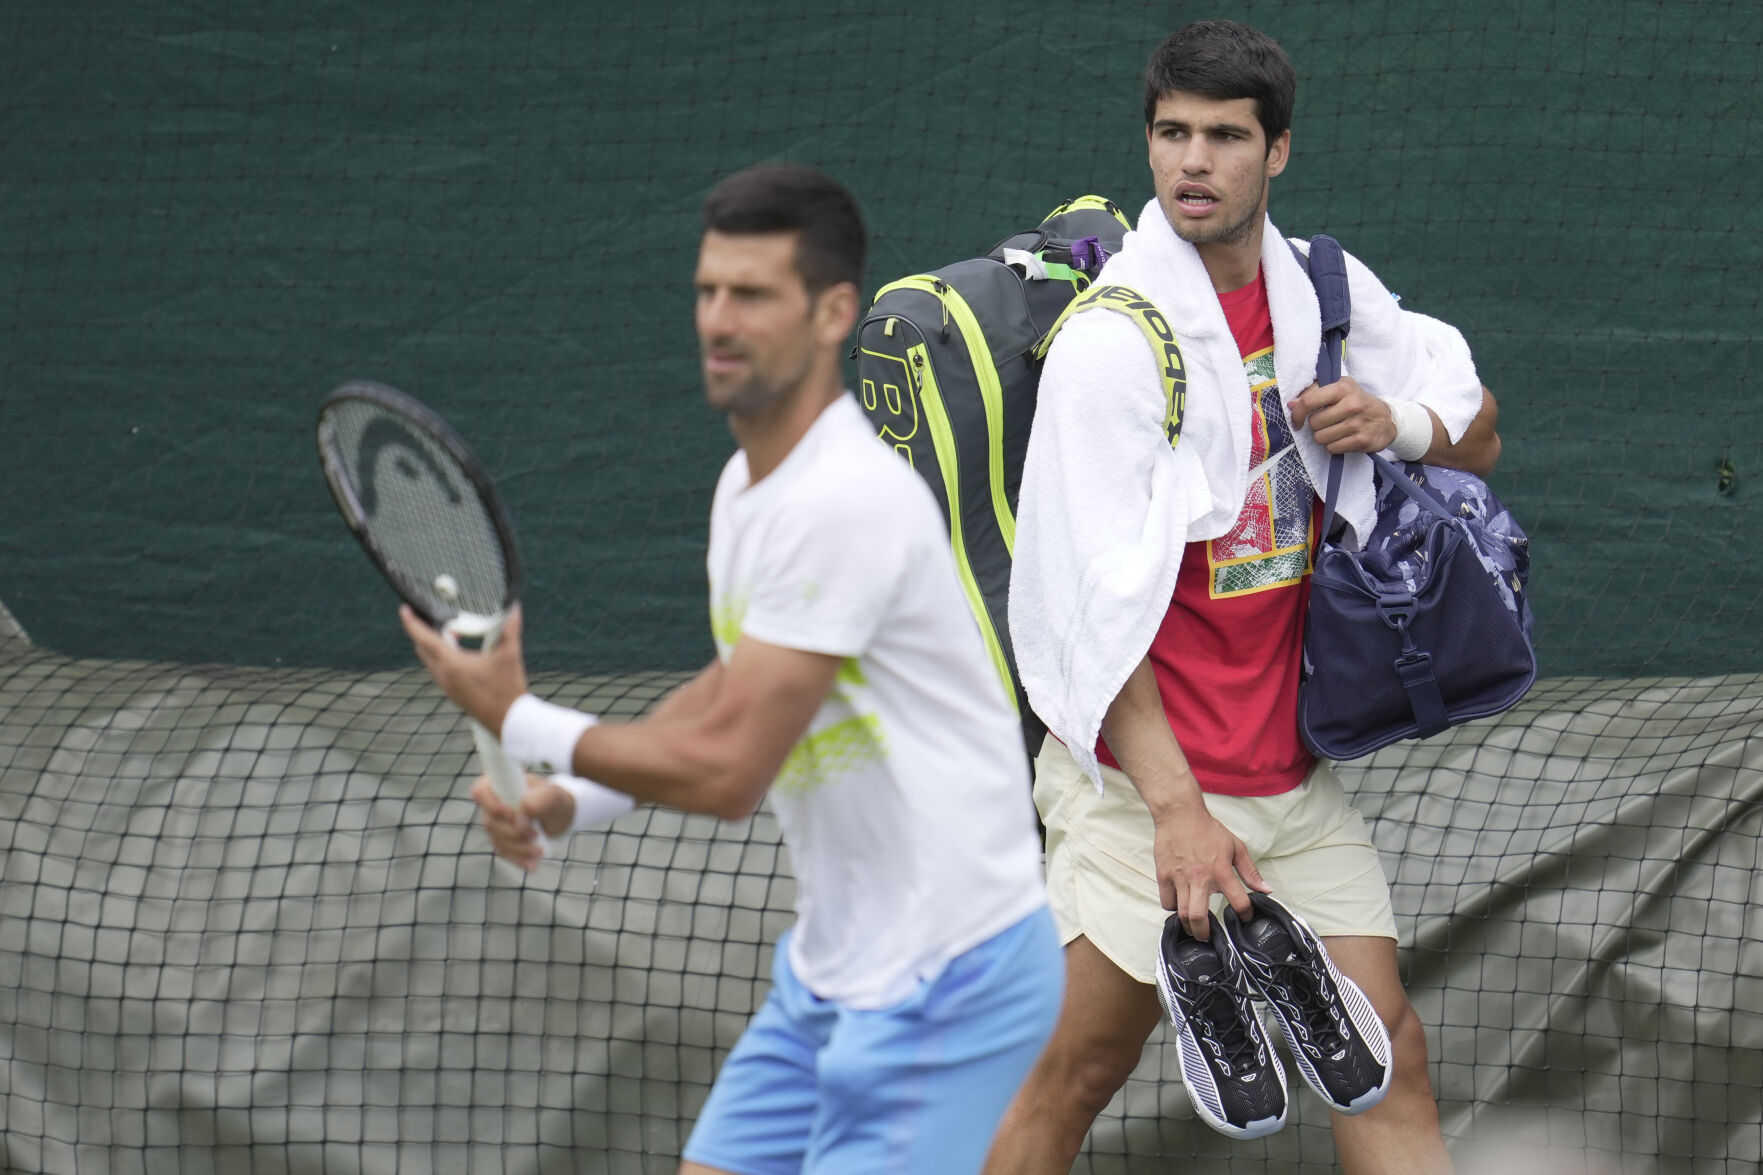 Djokovics bid for Wimbledon title No pic photo